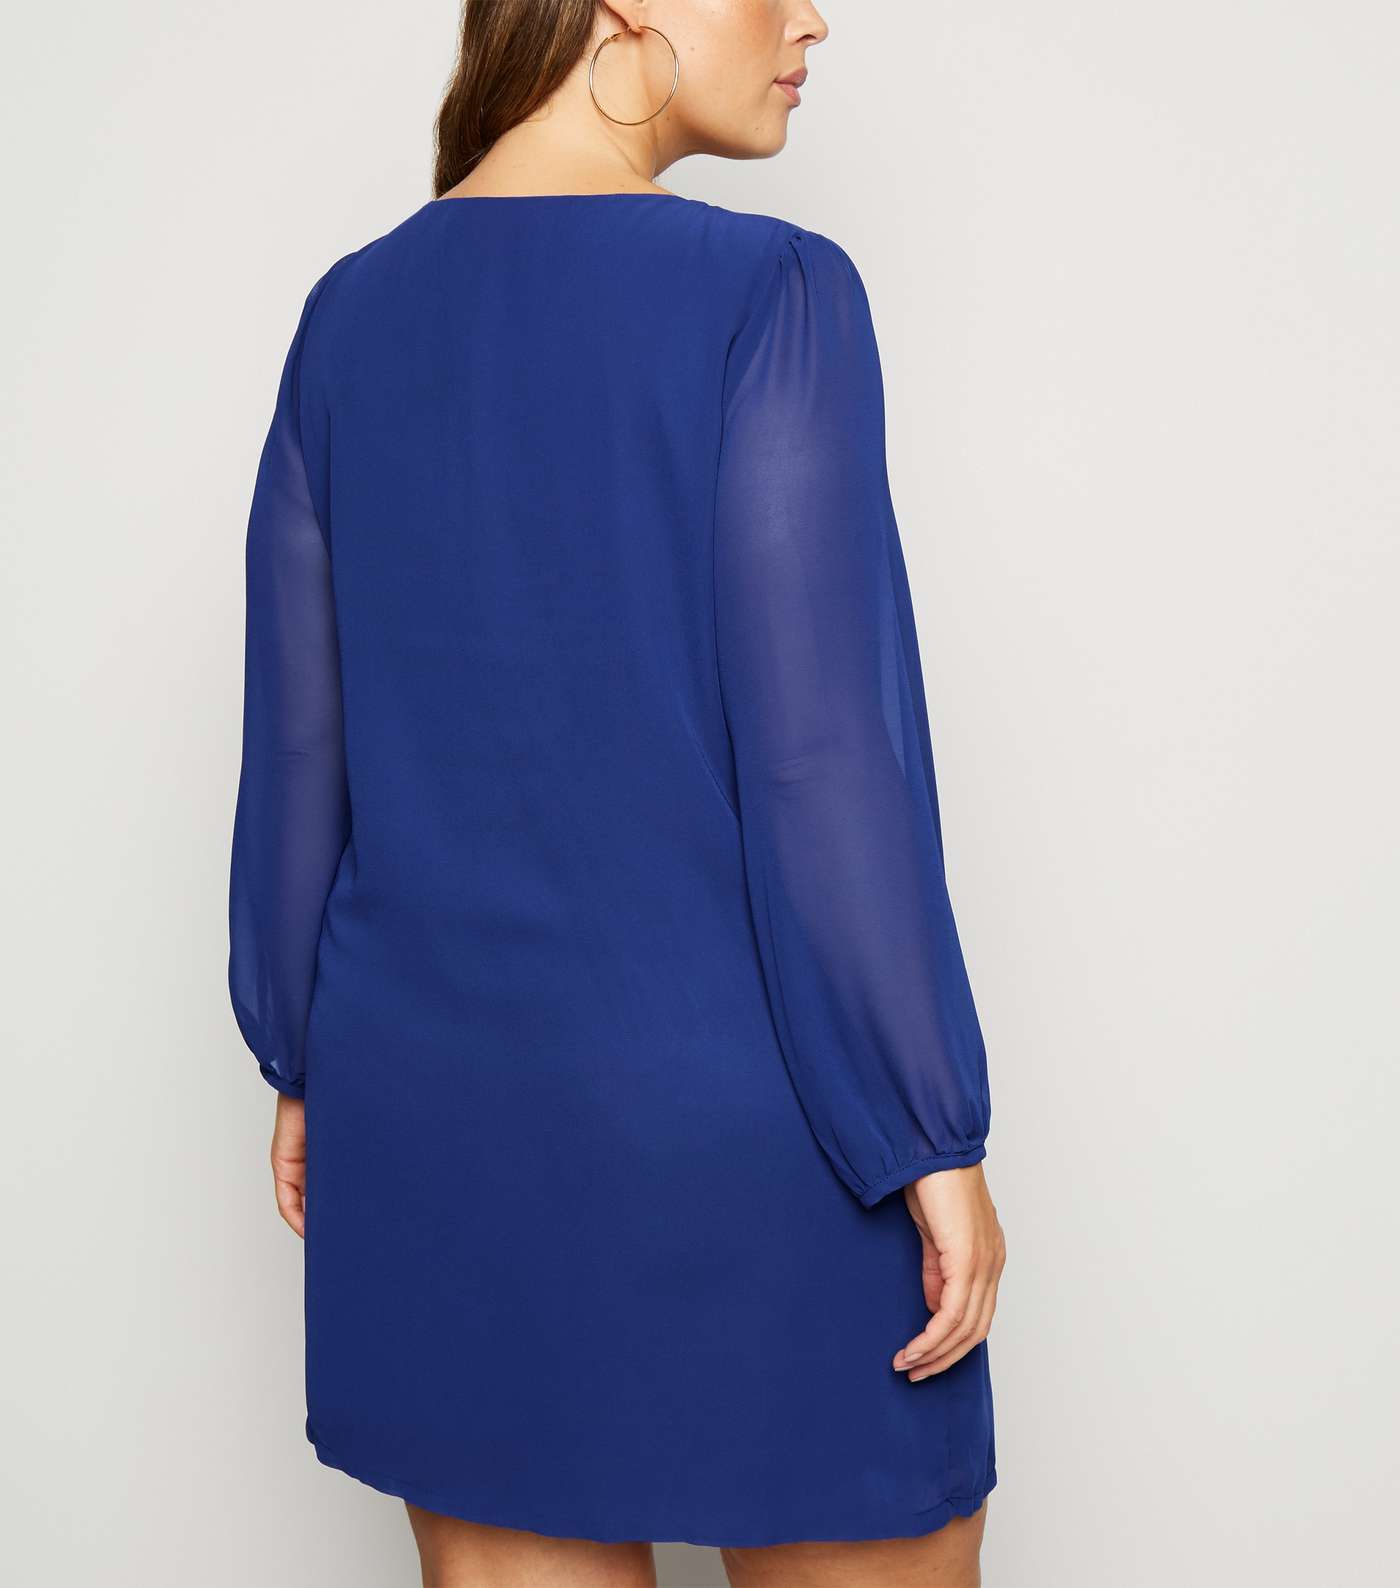 Mela Curves Bright Blue Tunic Dress Image 3